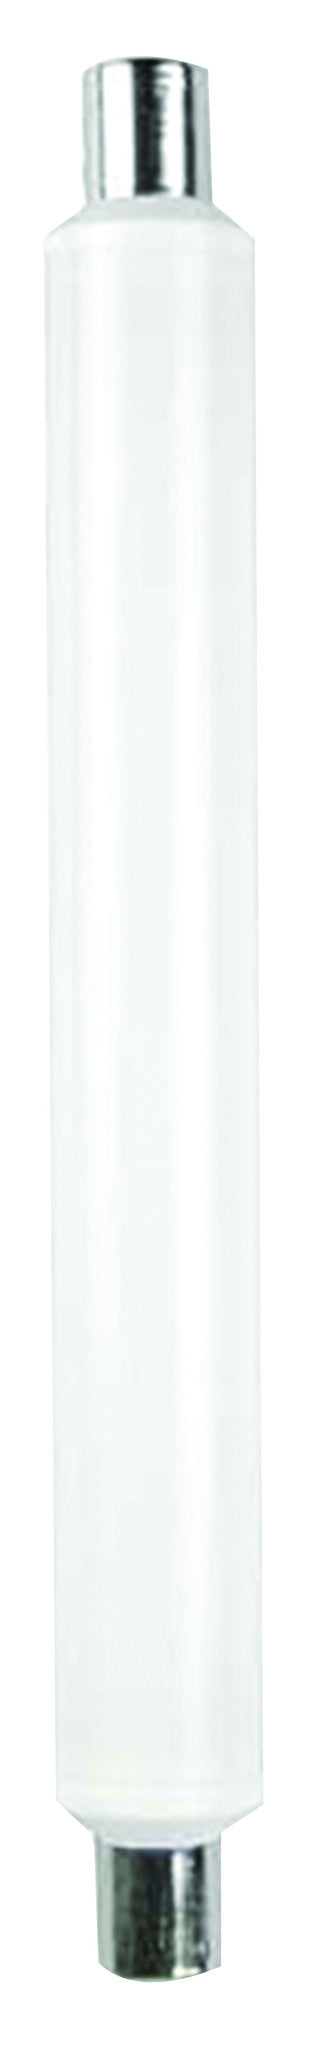 997106 - Tube Linolite LED S19 309mm 6W 2700K 500Lm